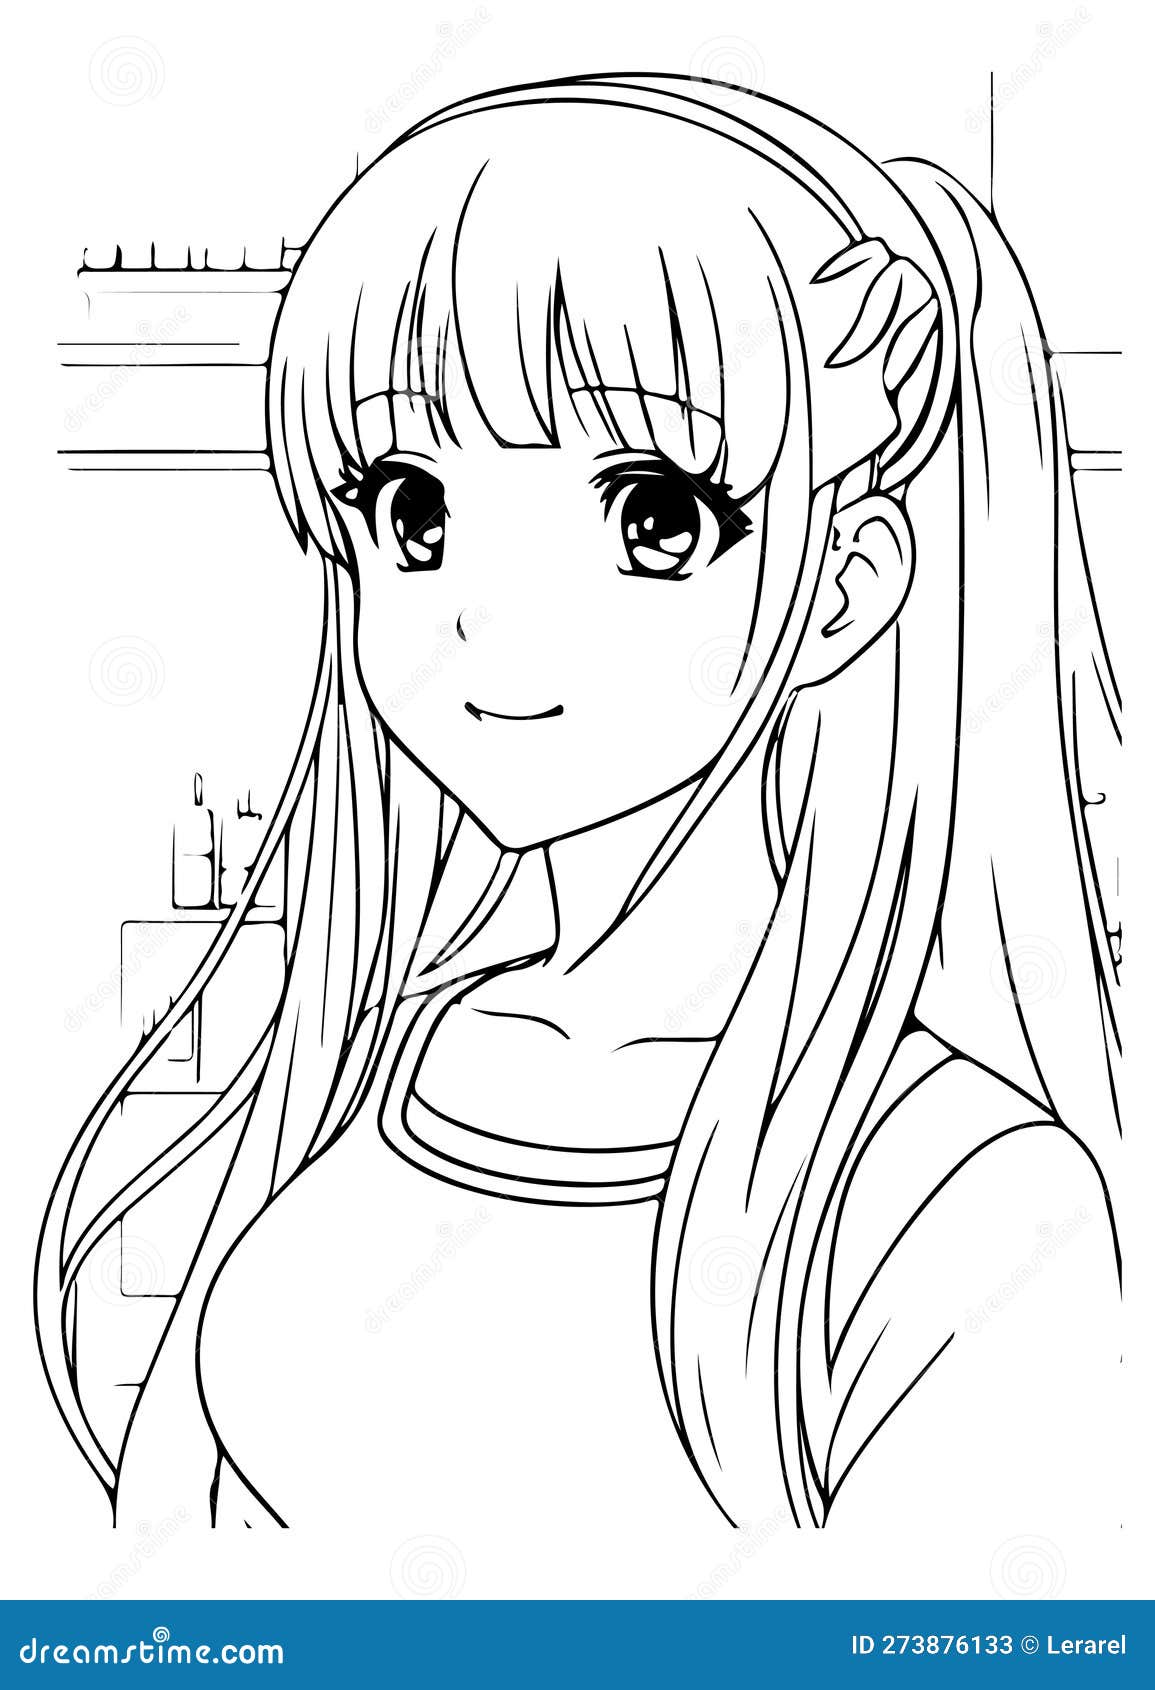 11+ Anime Girl Coloring Pages - PDF, JPG, AI Illustrator-demhanvico.com.vn